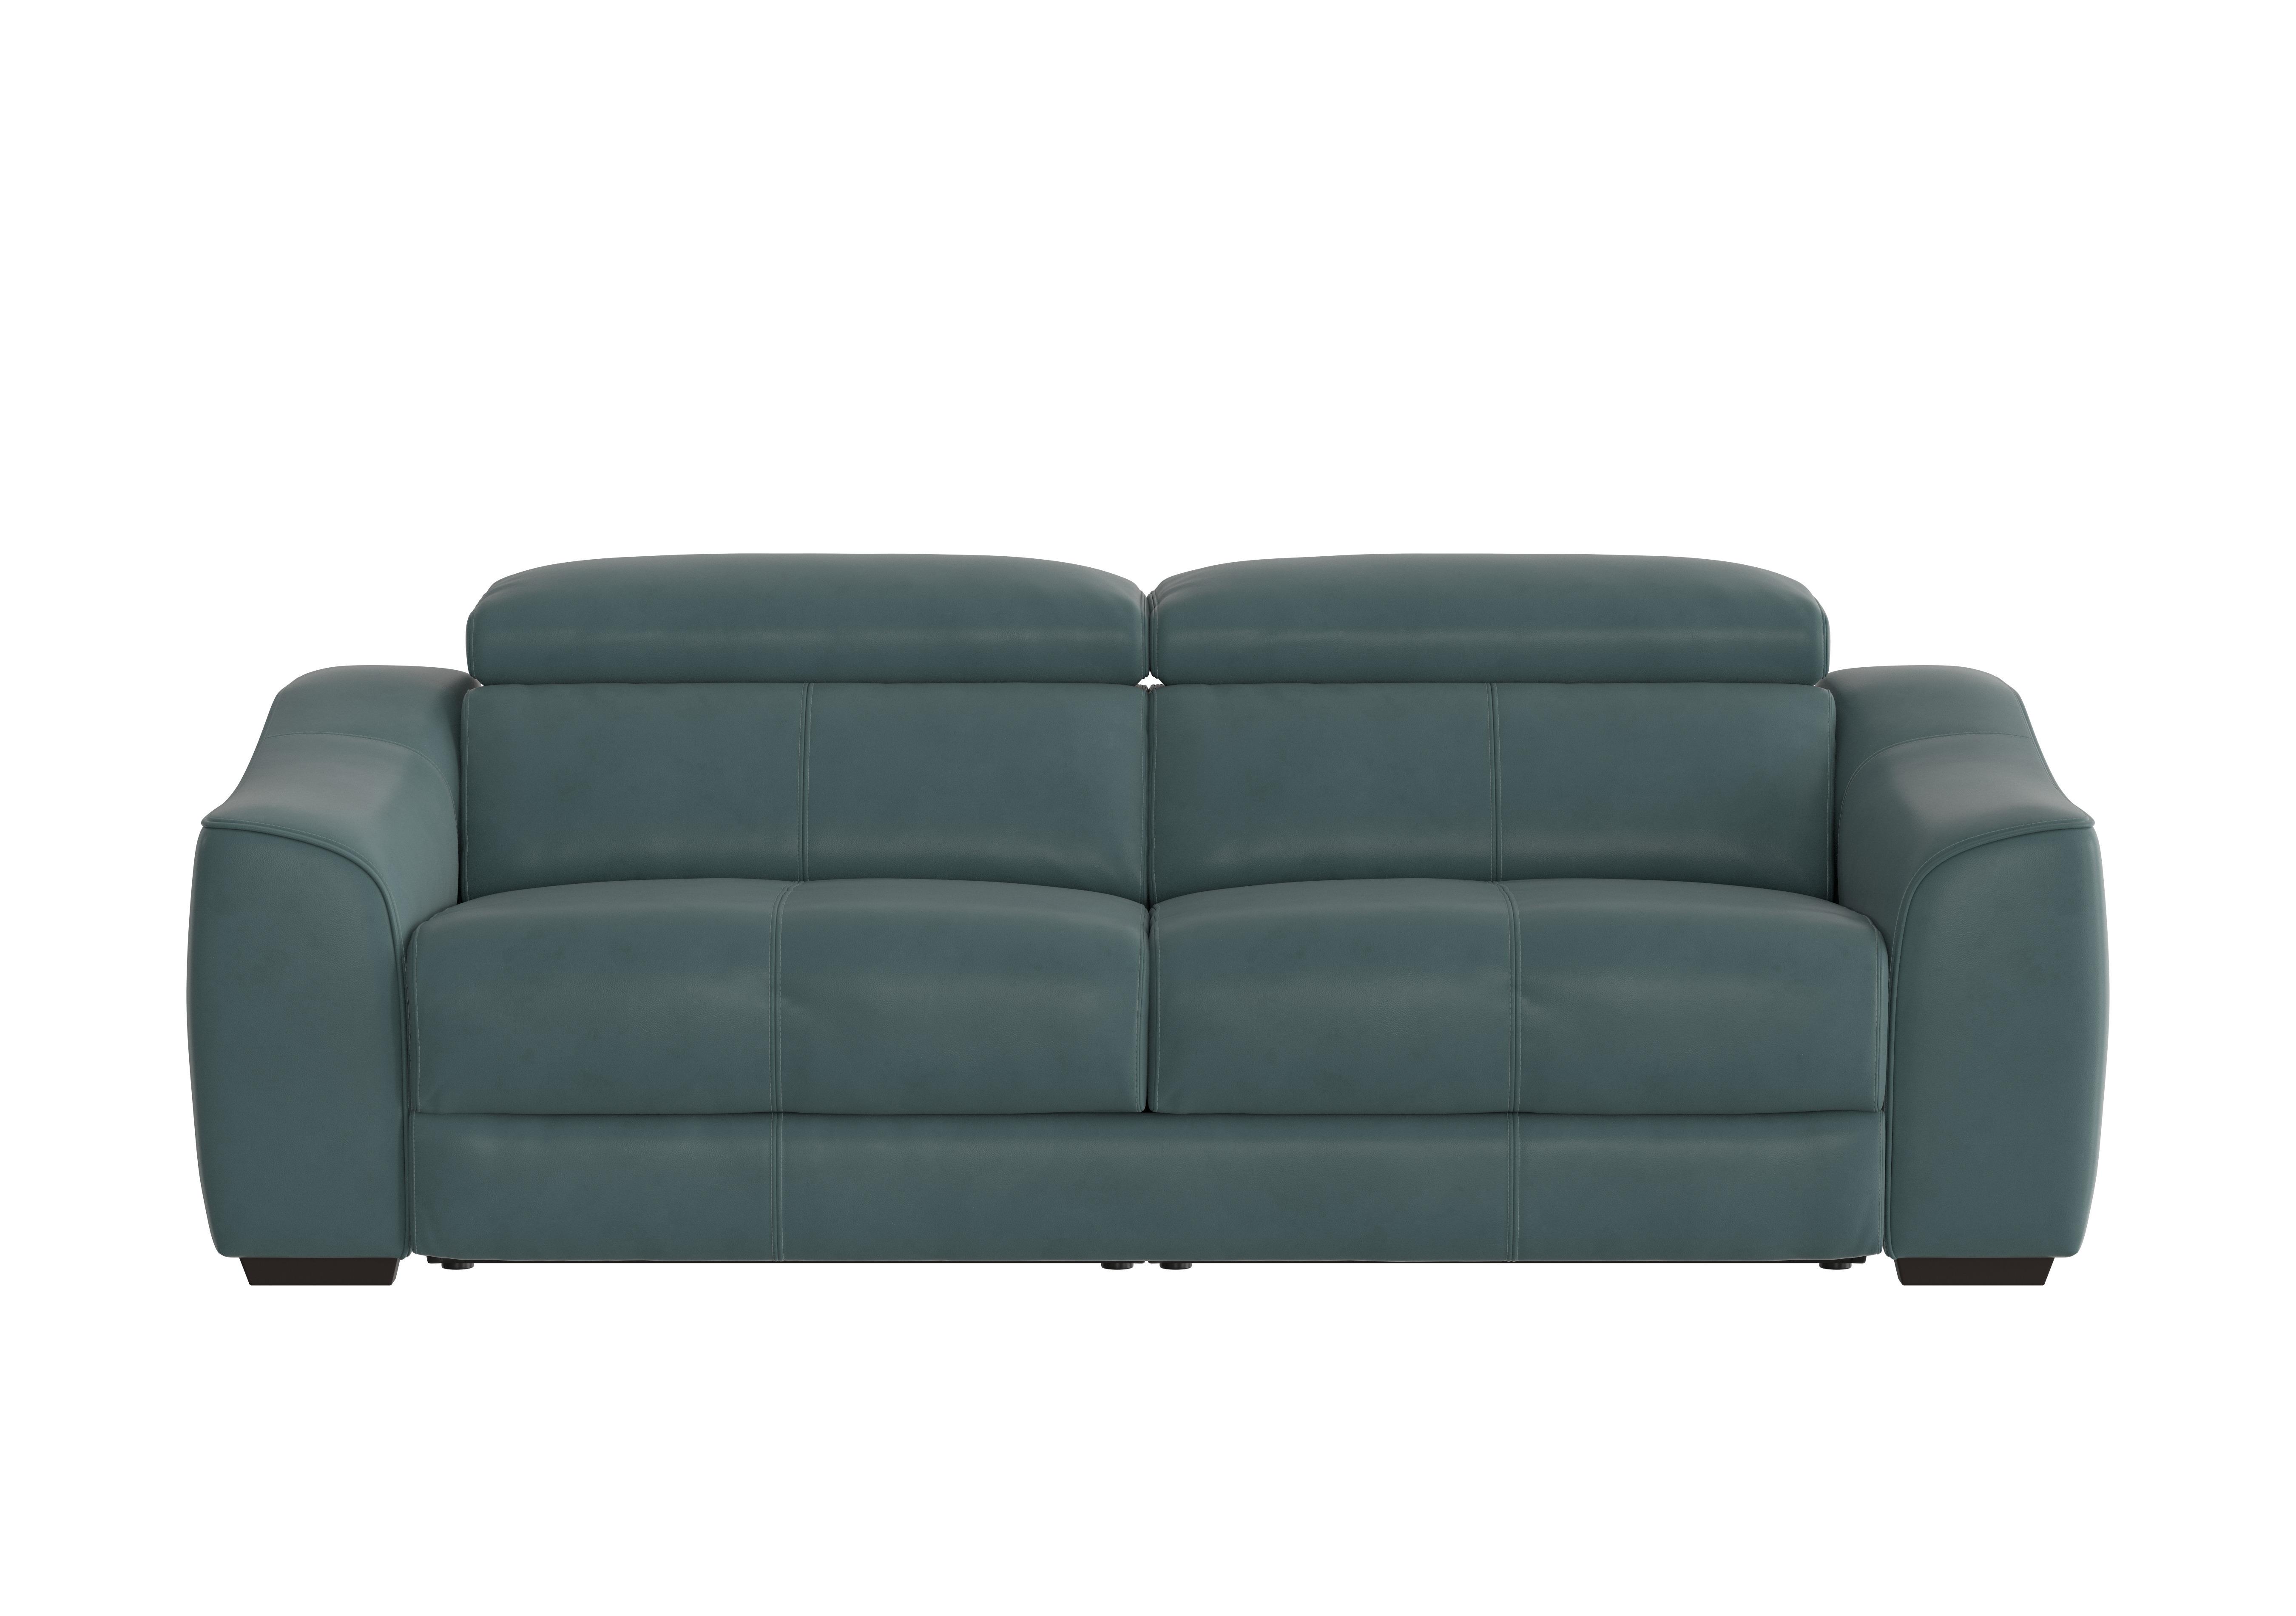 Elixir 3 Seater Leather Sofa in Bv-301e Lake Green on Furniture Village